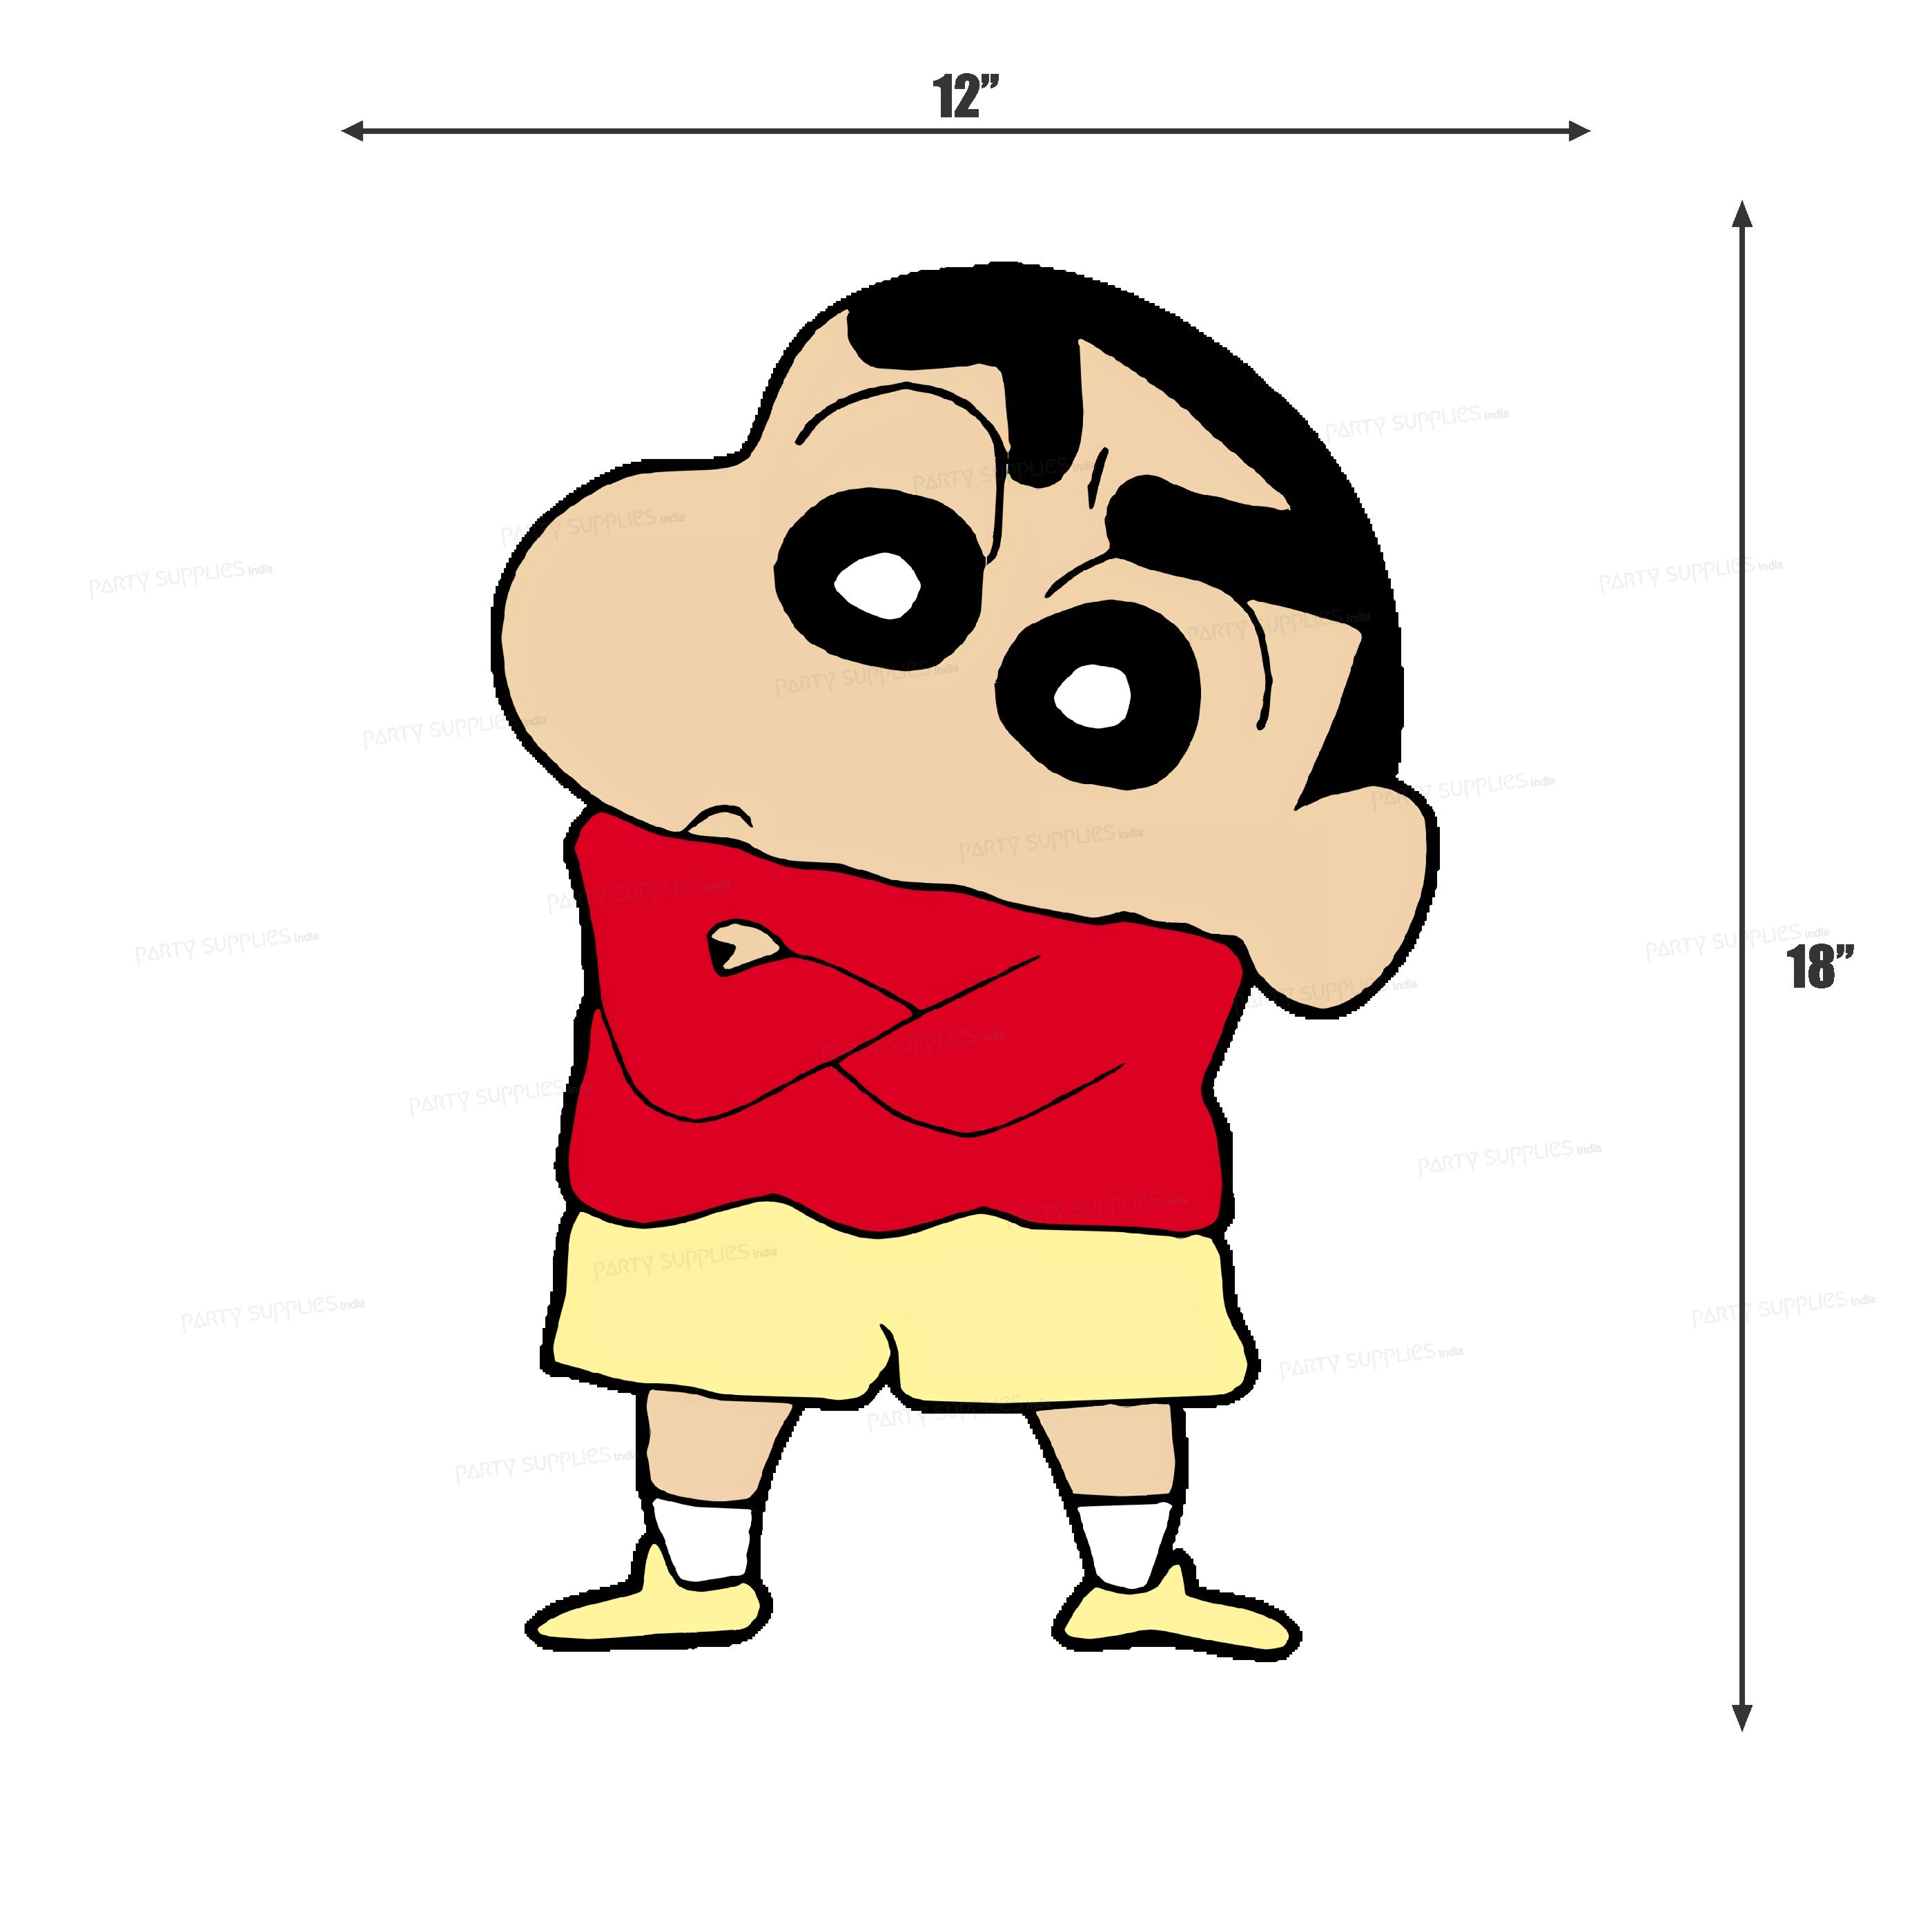 Draw Shinchan Characters – Draw it eazy